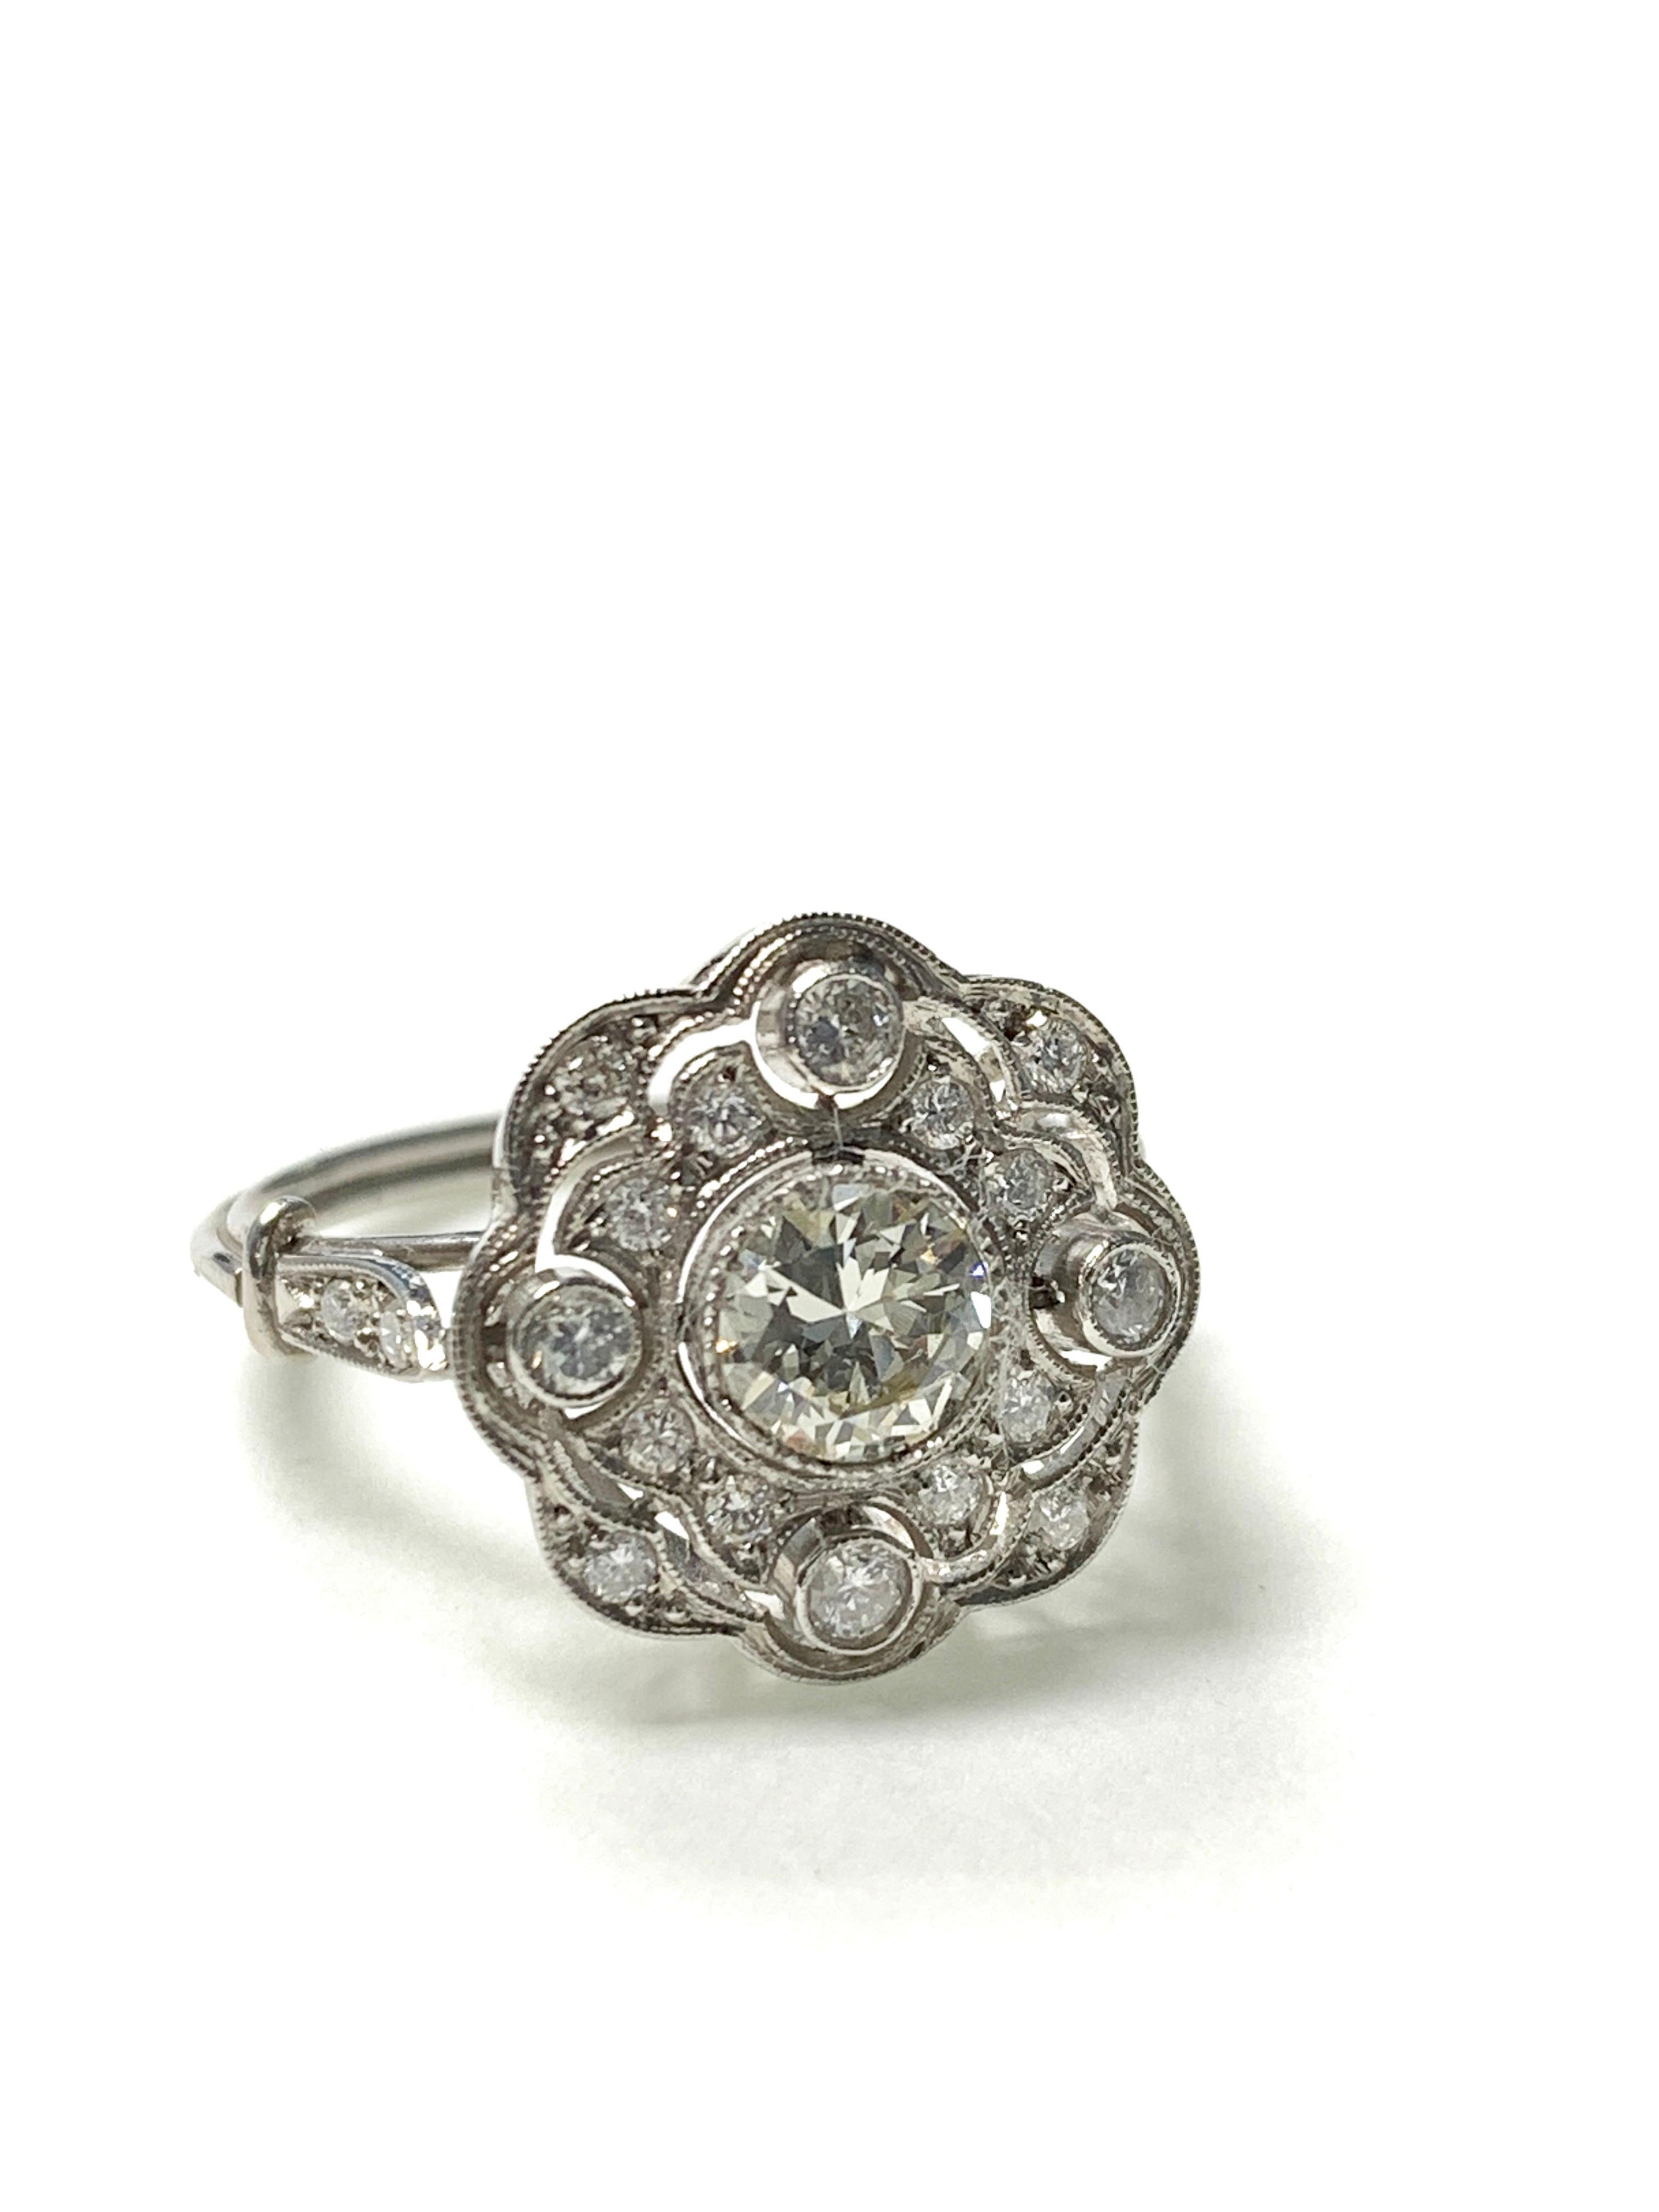 Women's Old European Cut Diamond Engagement Ring in Platinum For Sale